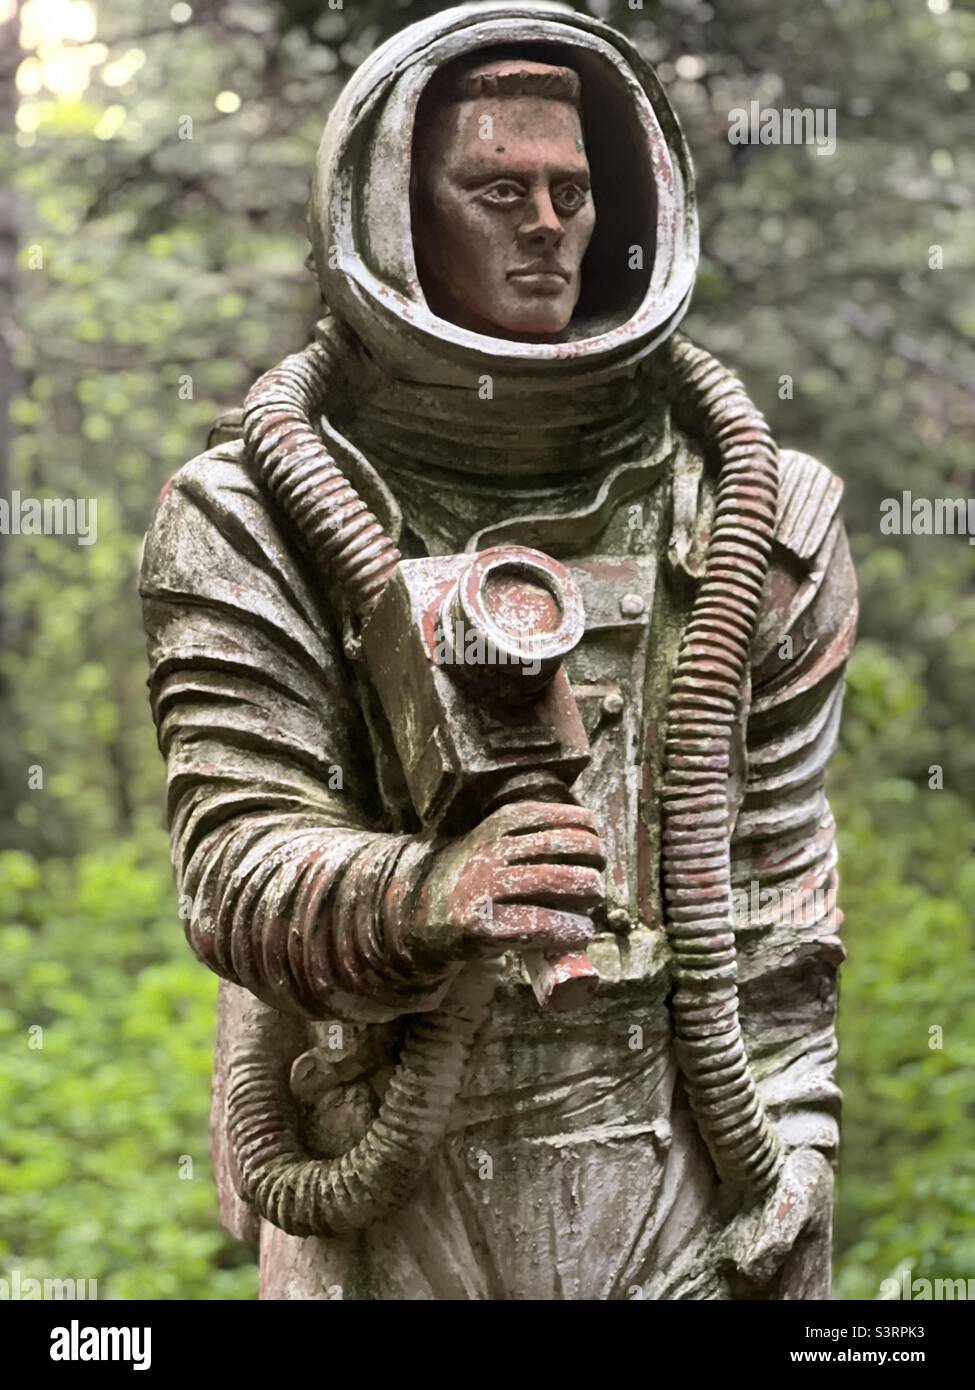 The astronaut statue in a garden Stock Photo